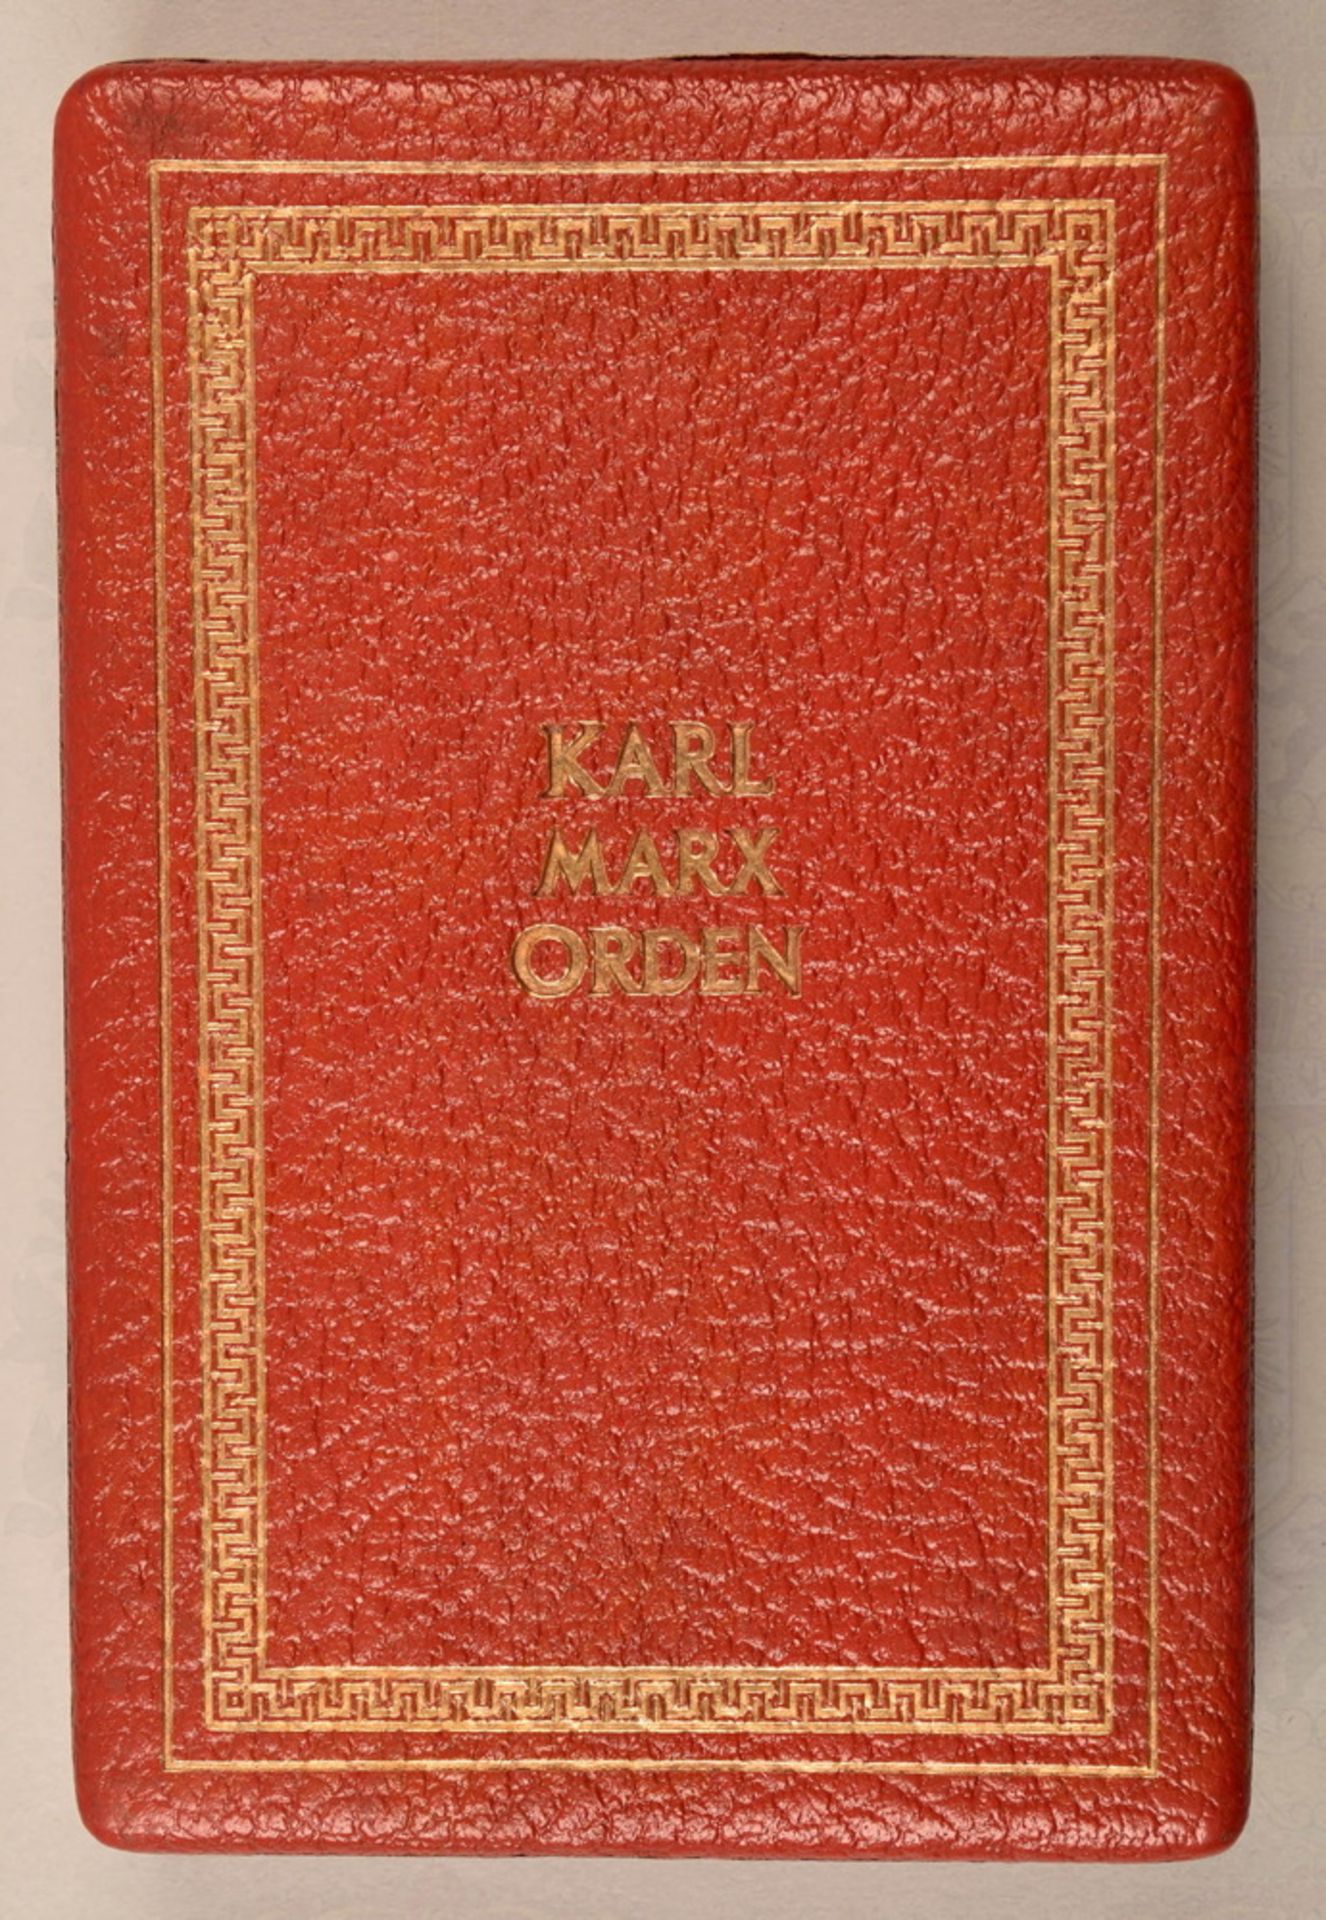 Order of Karl Marx of 900 gold - Image 8 of 8